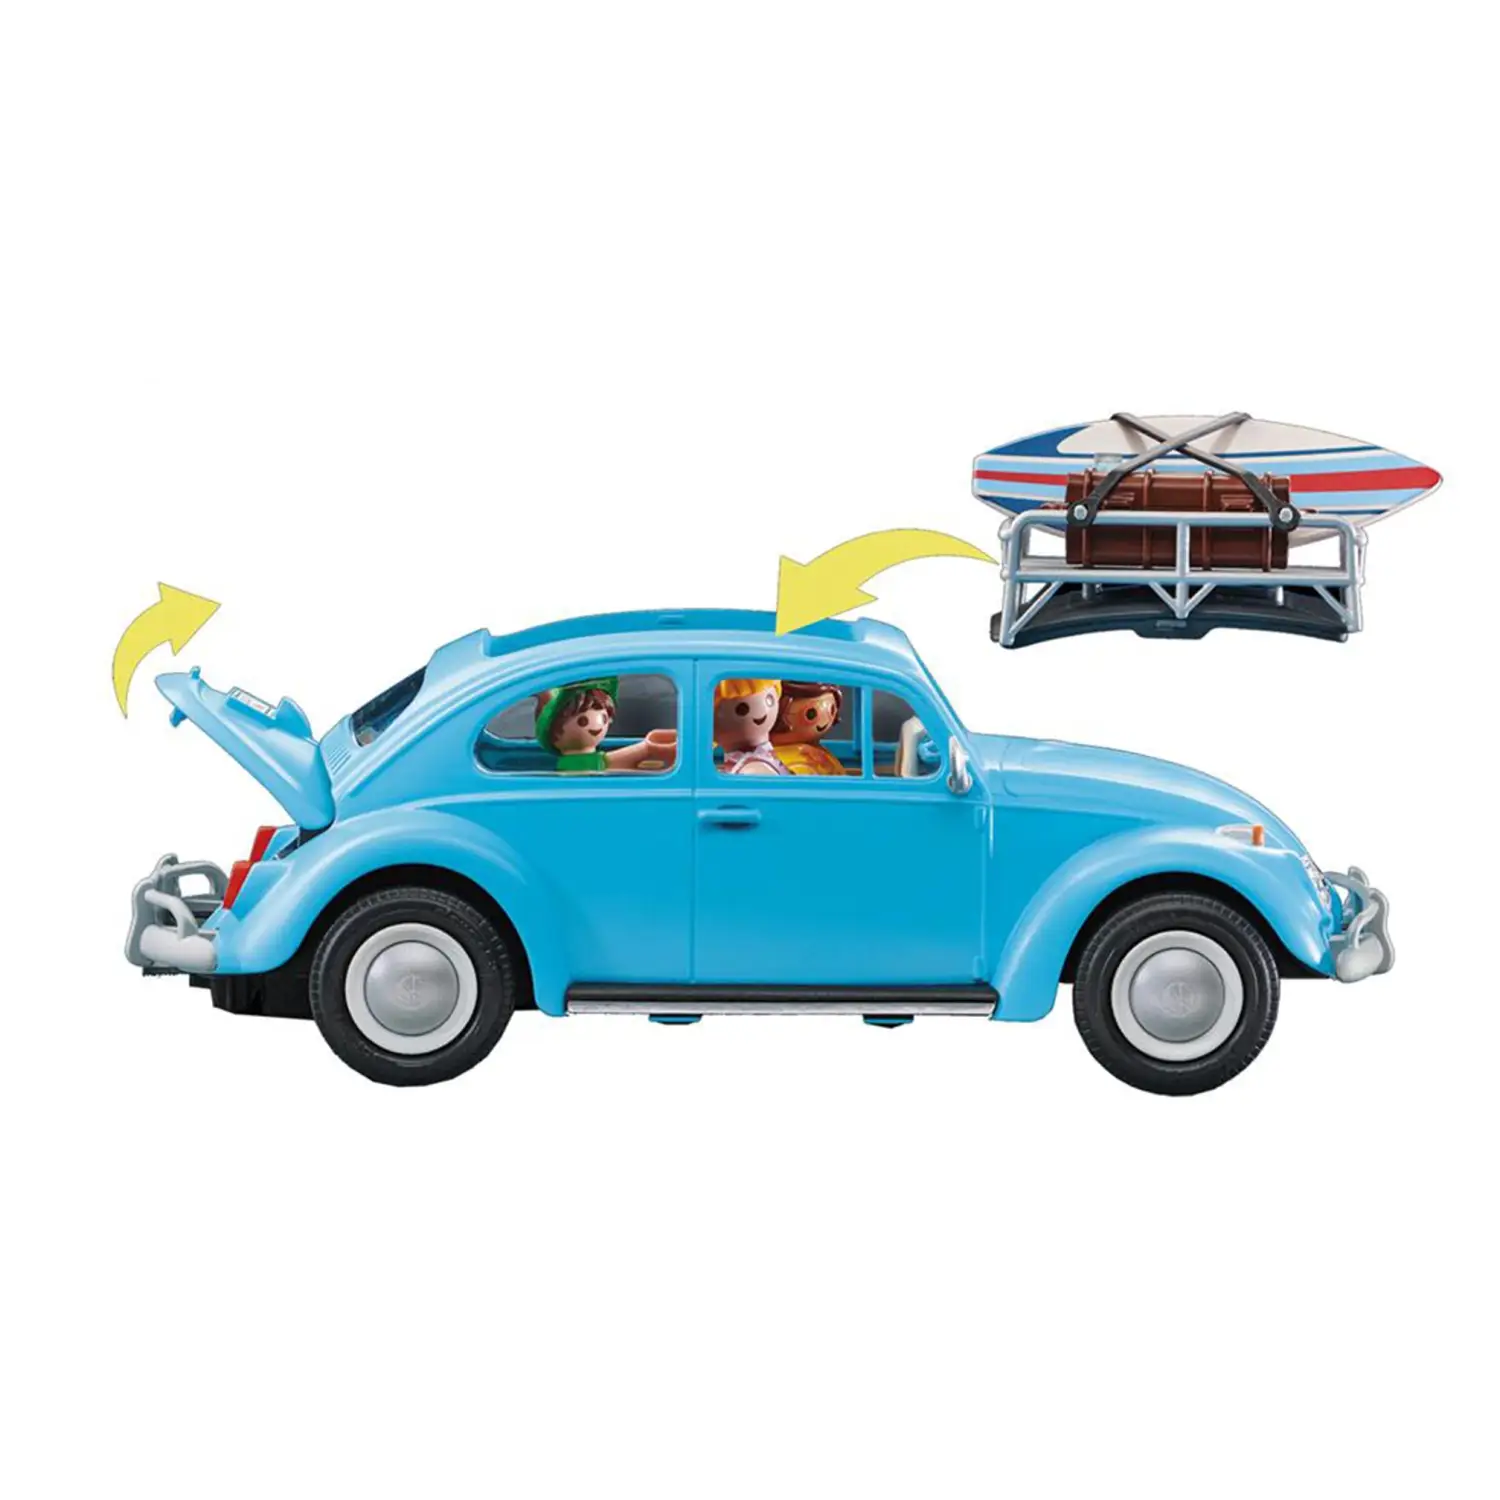 Playmobil Volkswagen Beetle 70177 (for kids 5 yrs old